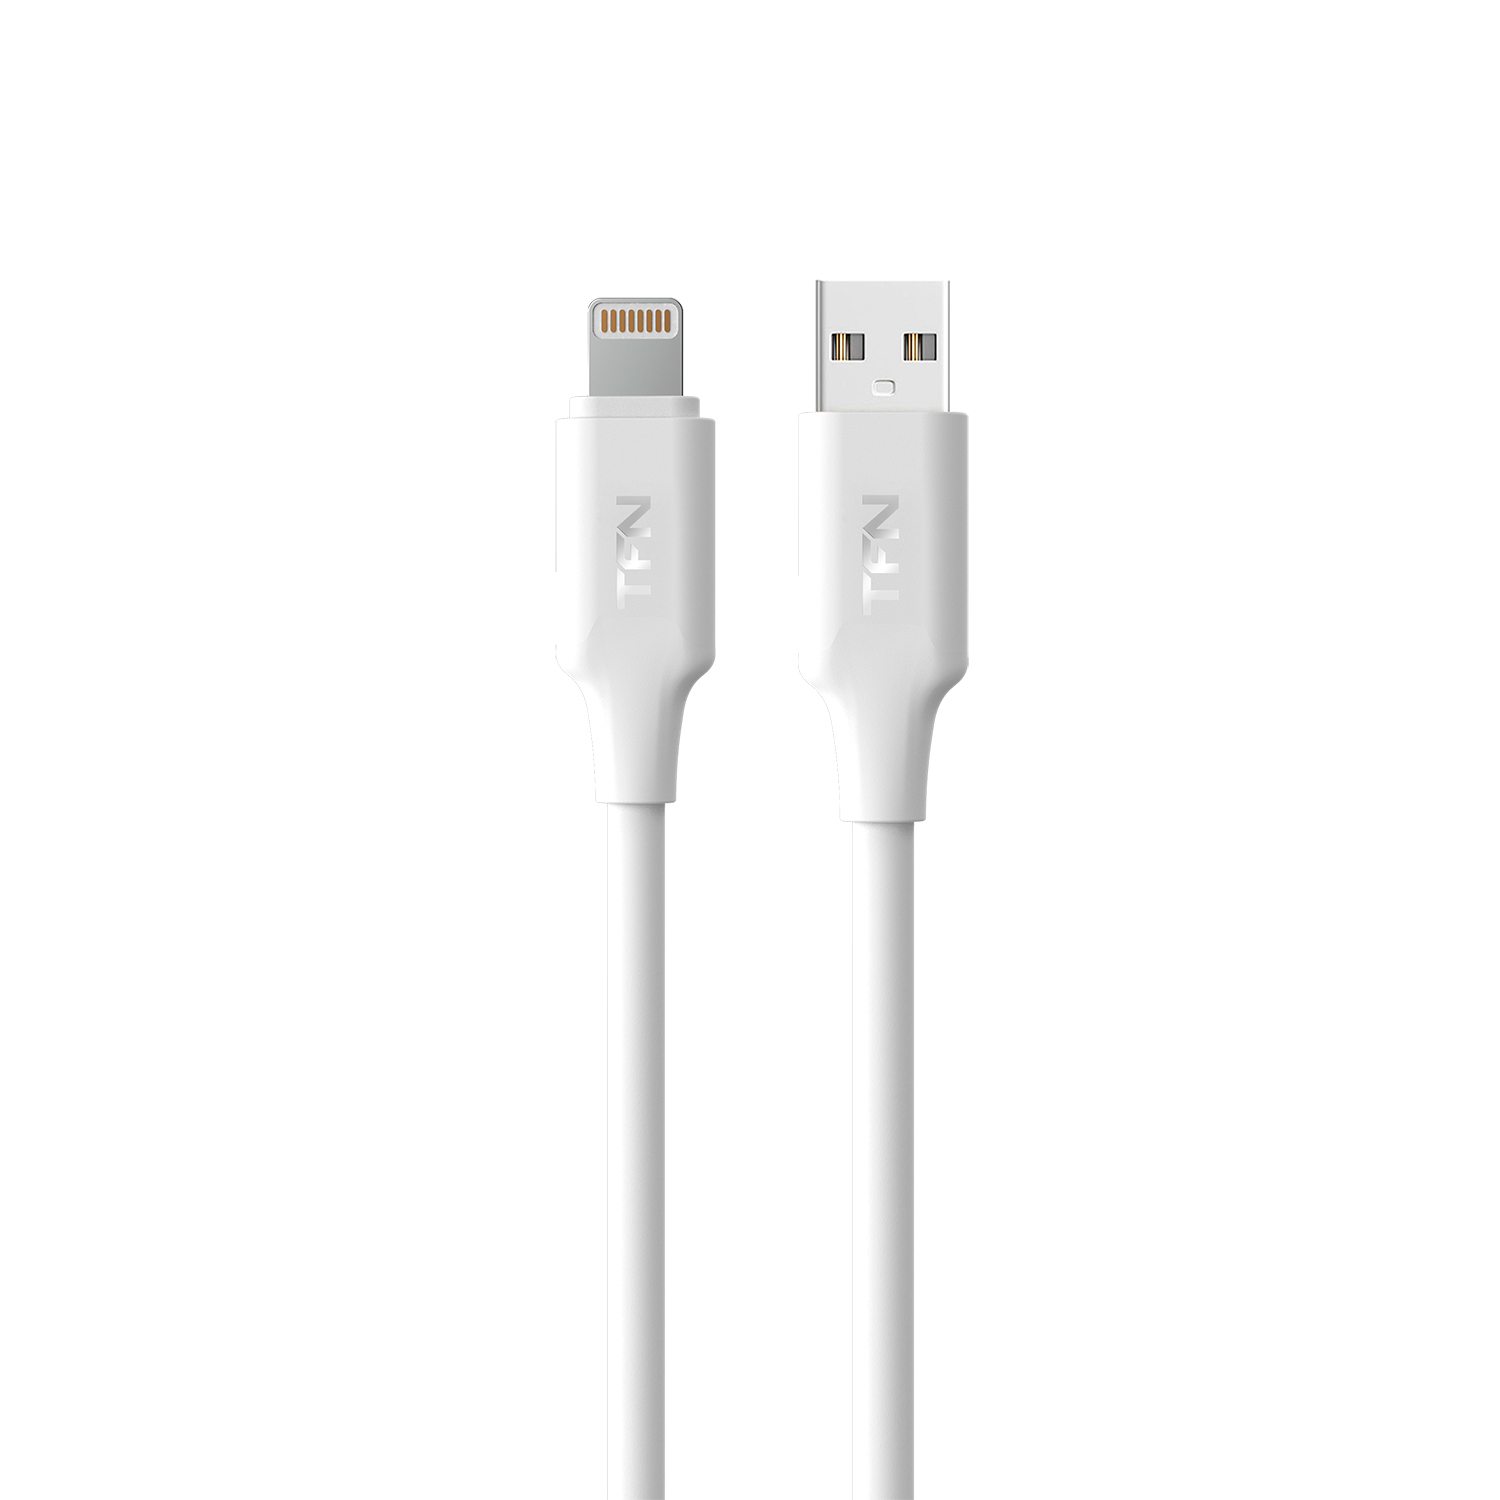 Дата-кабель USB с разъемом 8-pin TFN для Apple 1м, white, TFN, TFN-CLIGUSB1MWH